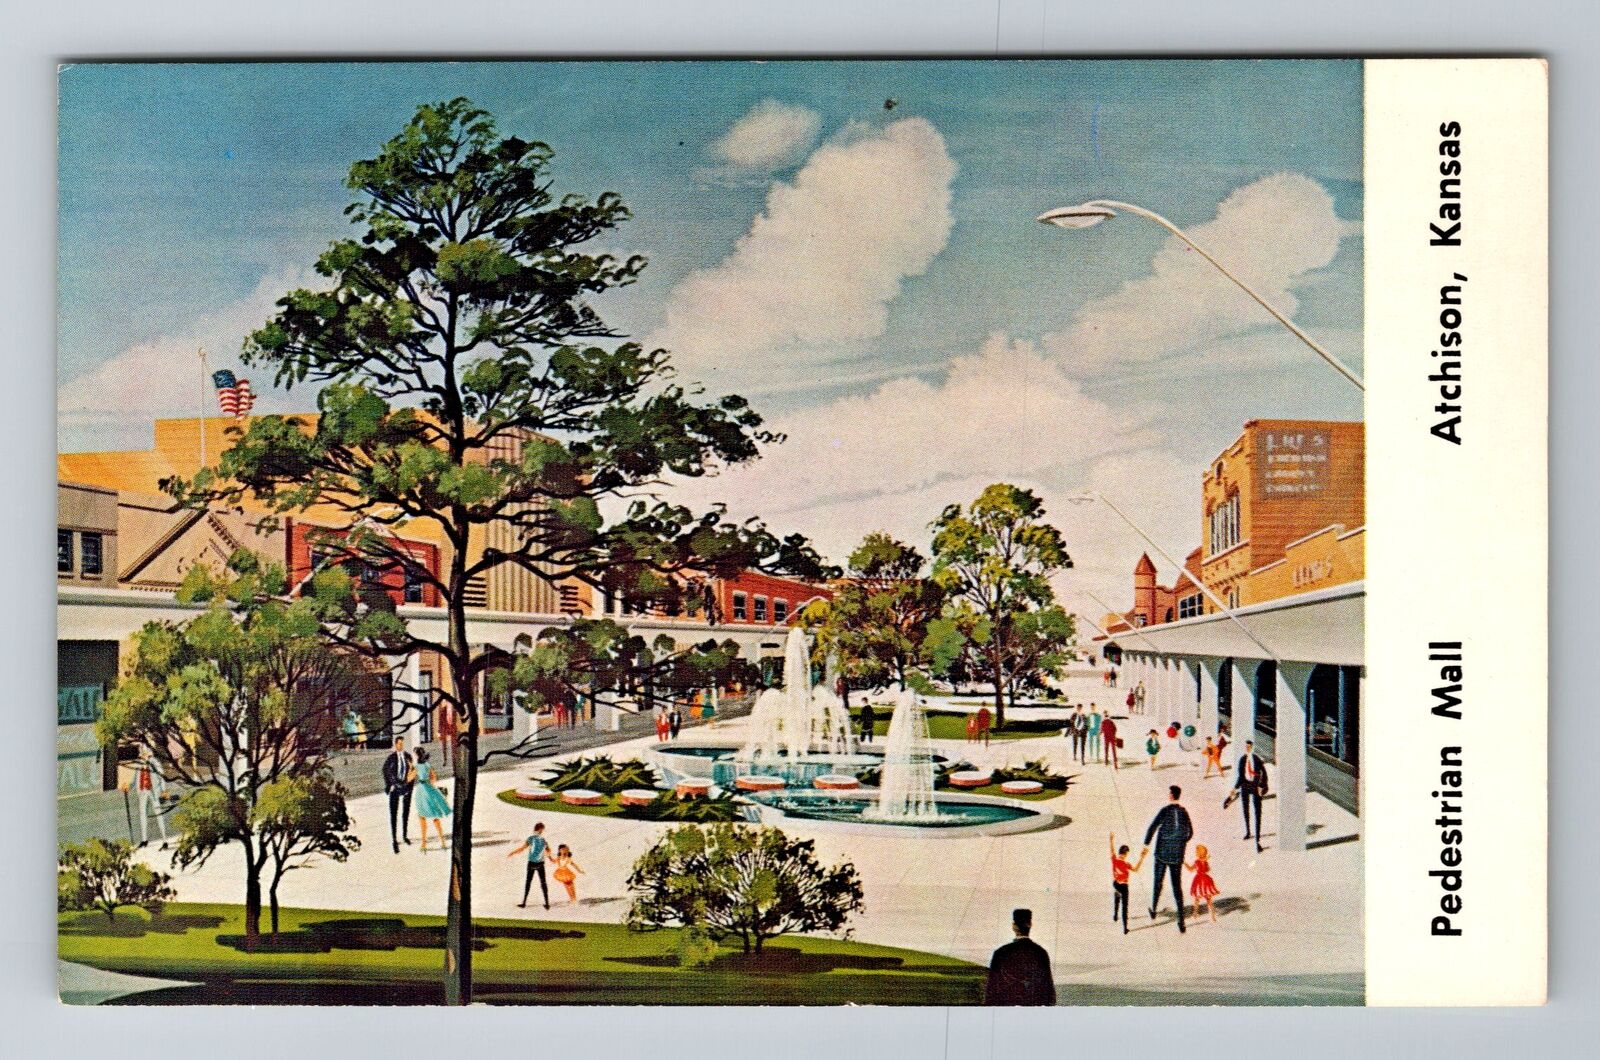 Atchison KS-Kansas, Pedestrian Mall, Antique, Vintage Souvenir Postcard